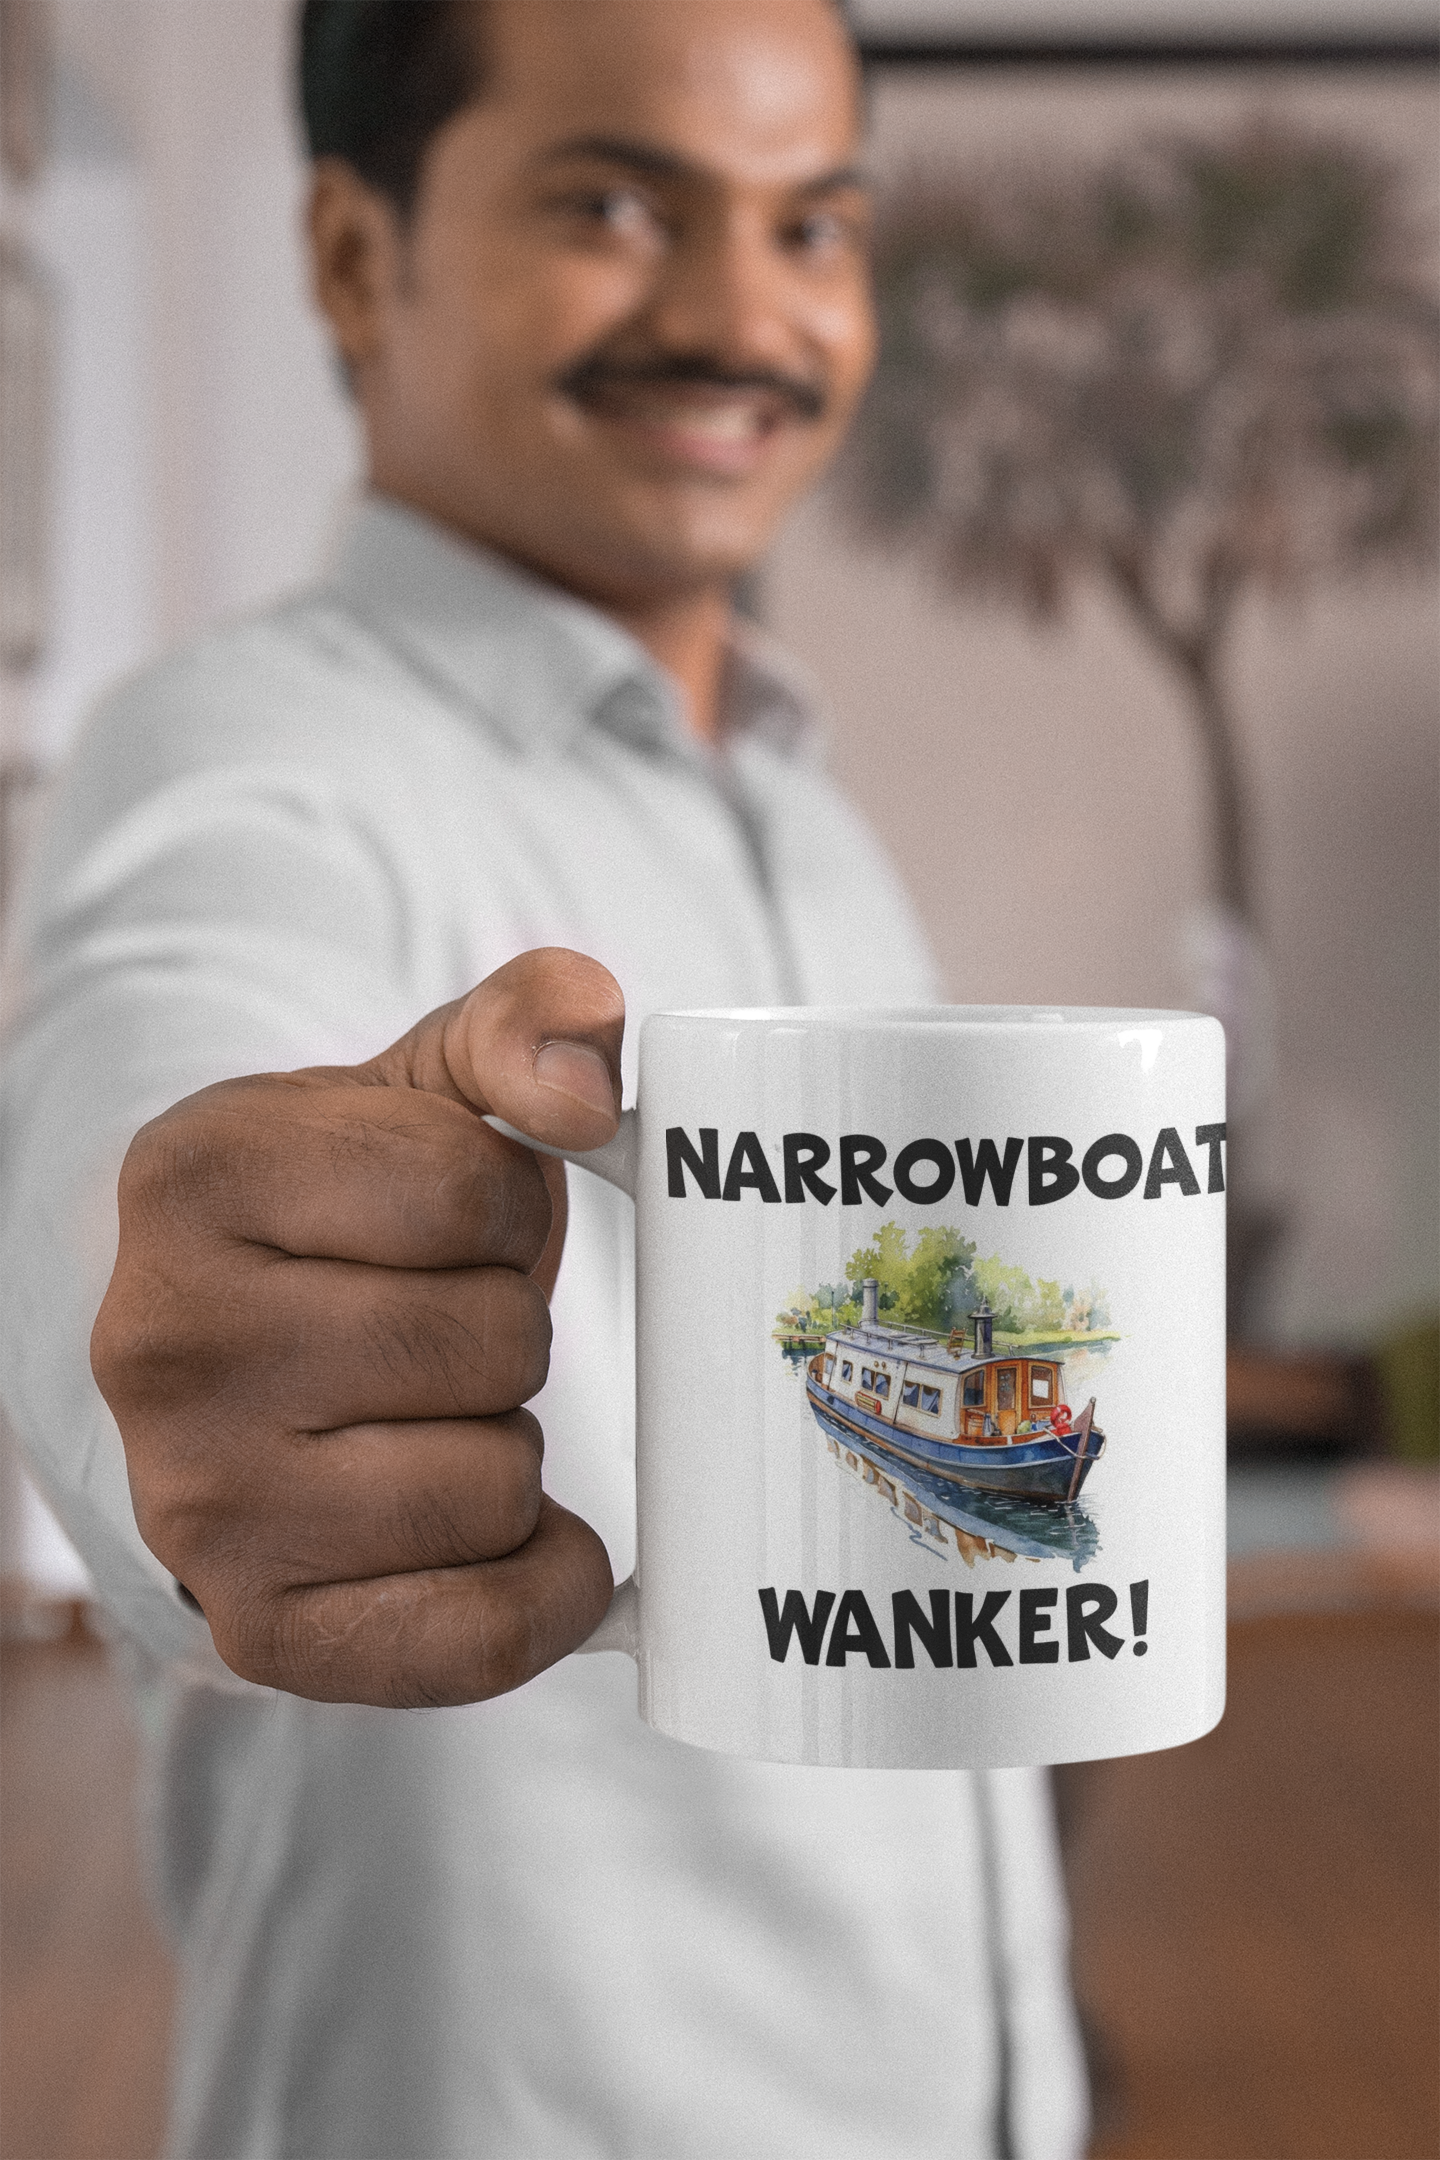 Narrowboat Wanker Mug Gift - Novelty Cute Canal Boat Rude Funny Holiday Travel Boating Vacation Cup Present